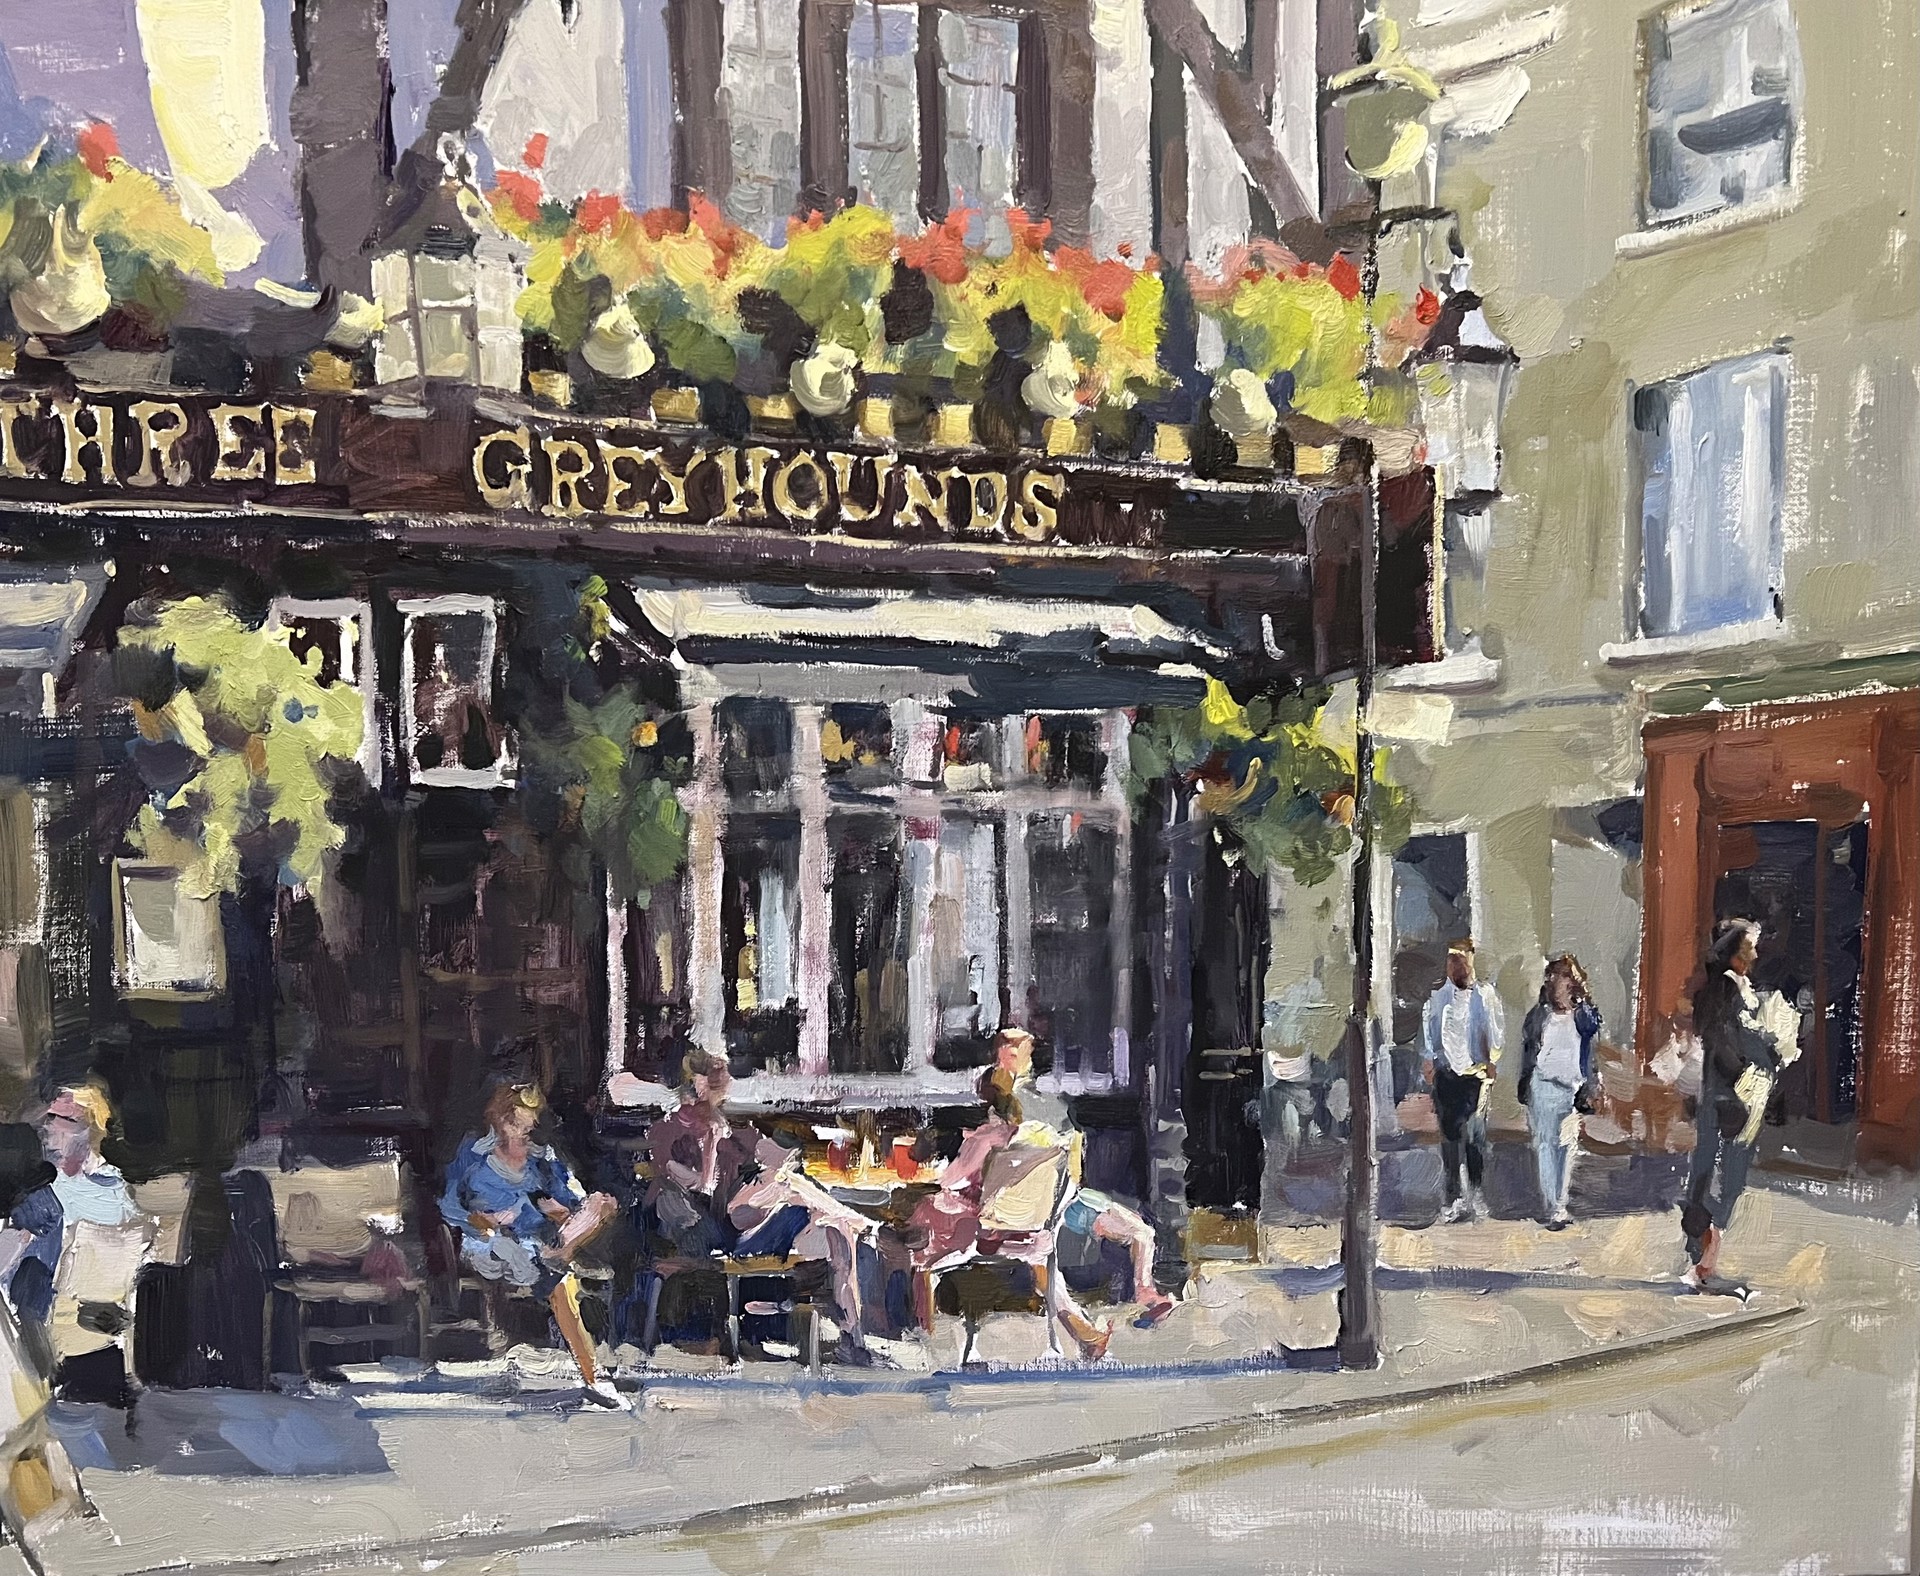 The Three greyhounds London Pub